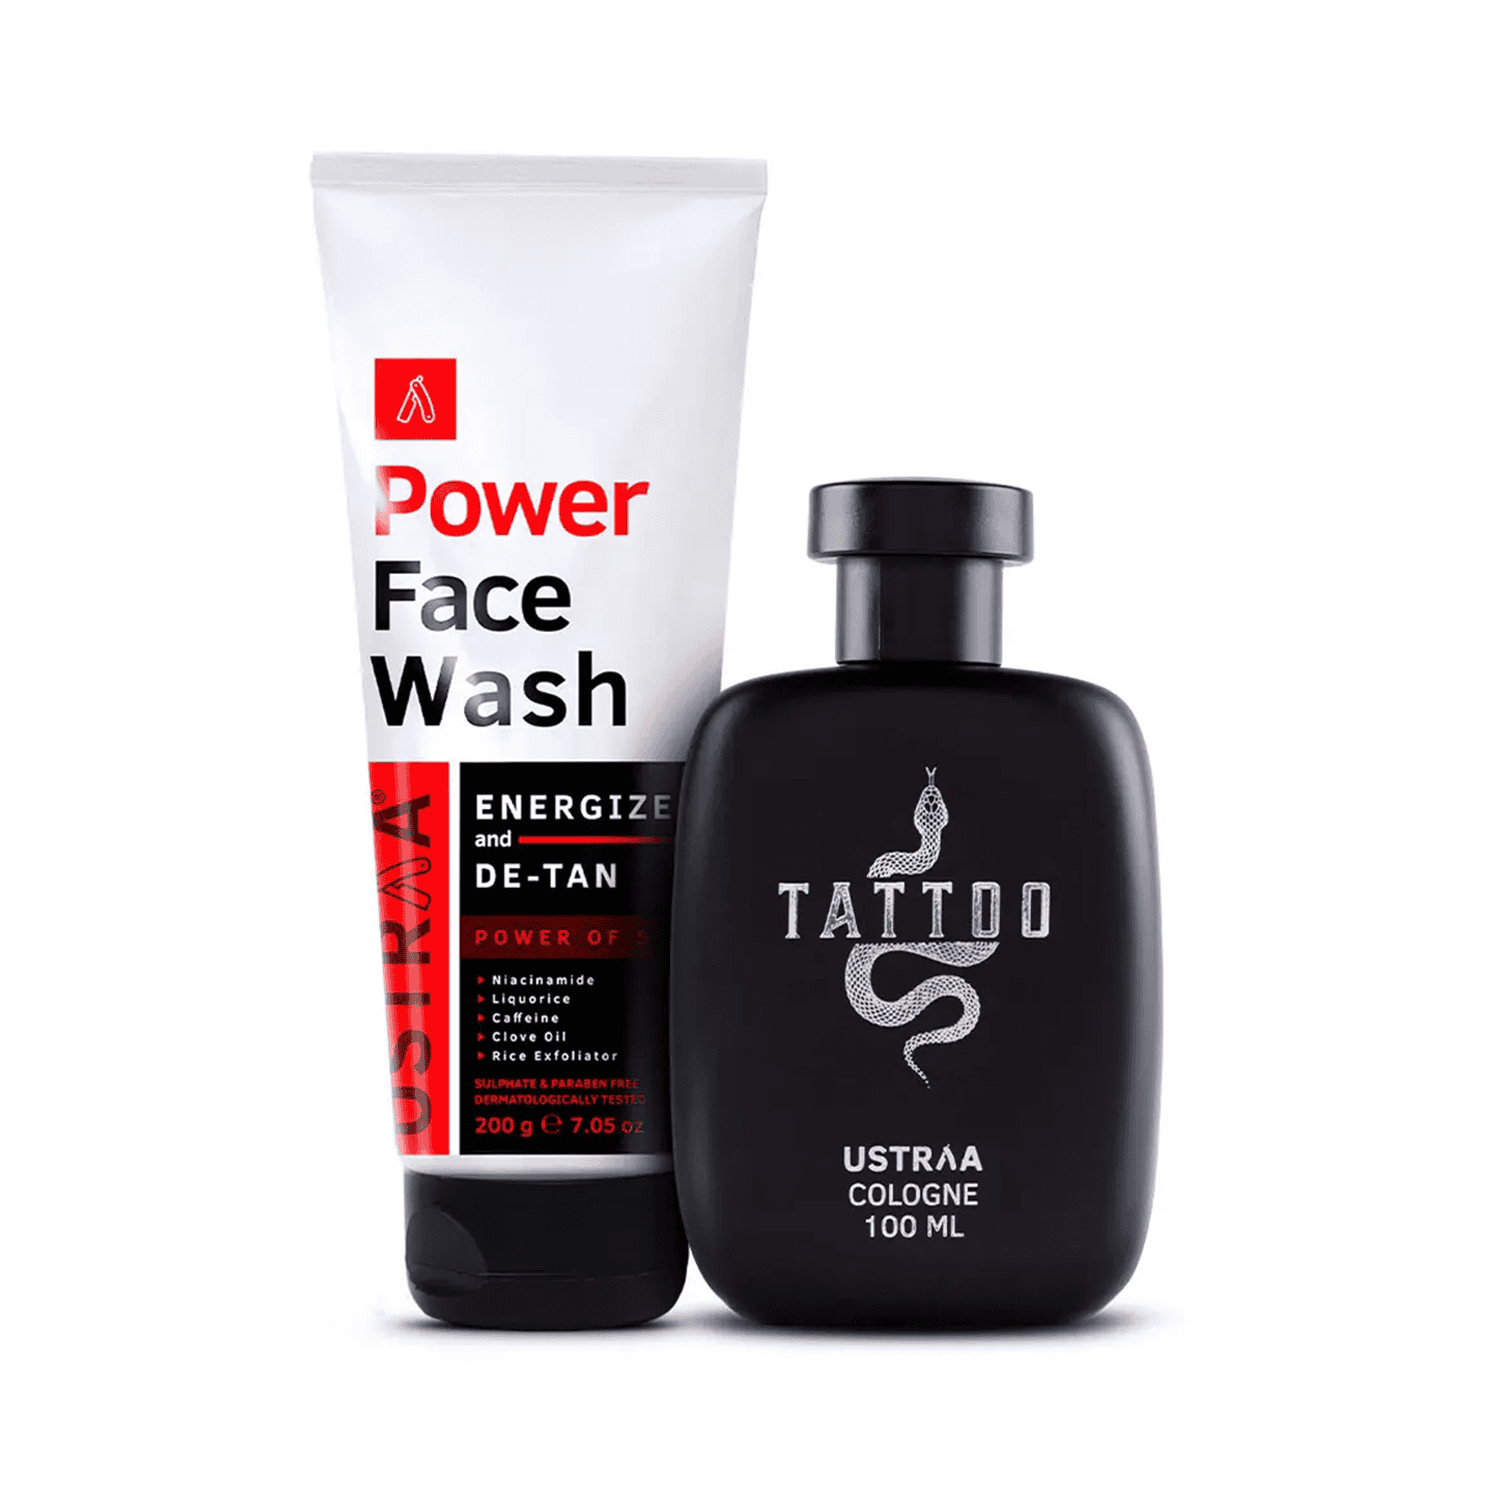 Ustraa | Ustraa Power Face Wash De-tan & Tattoo Cologne